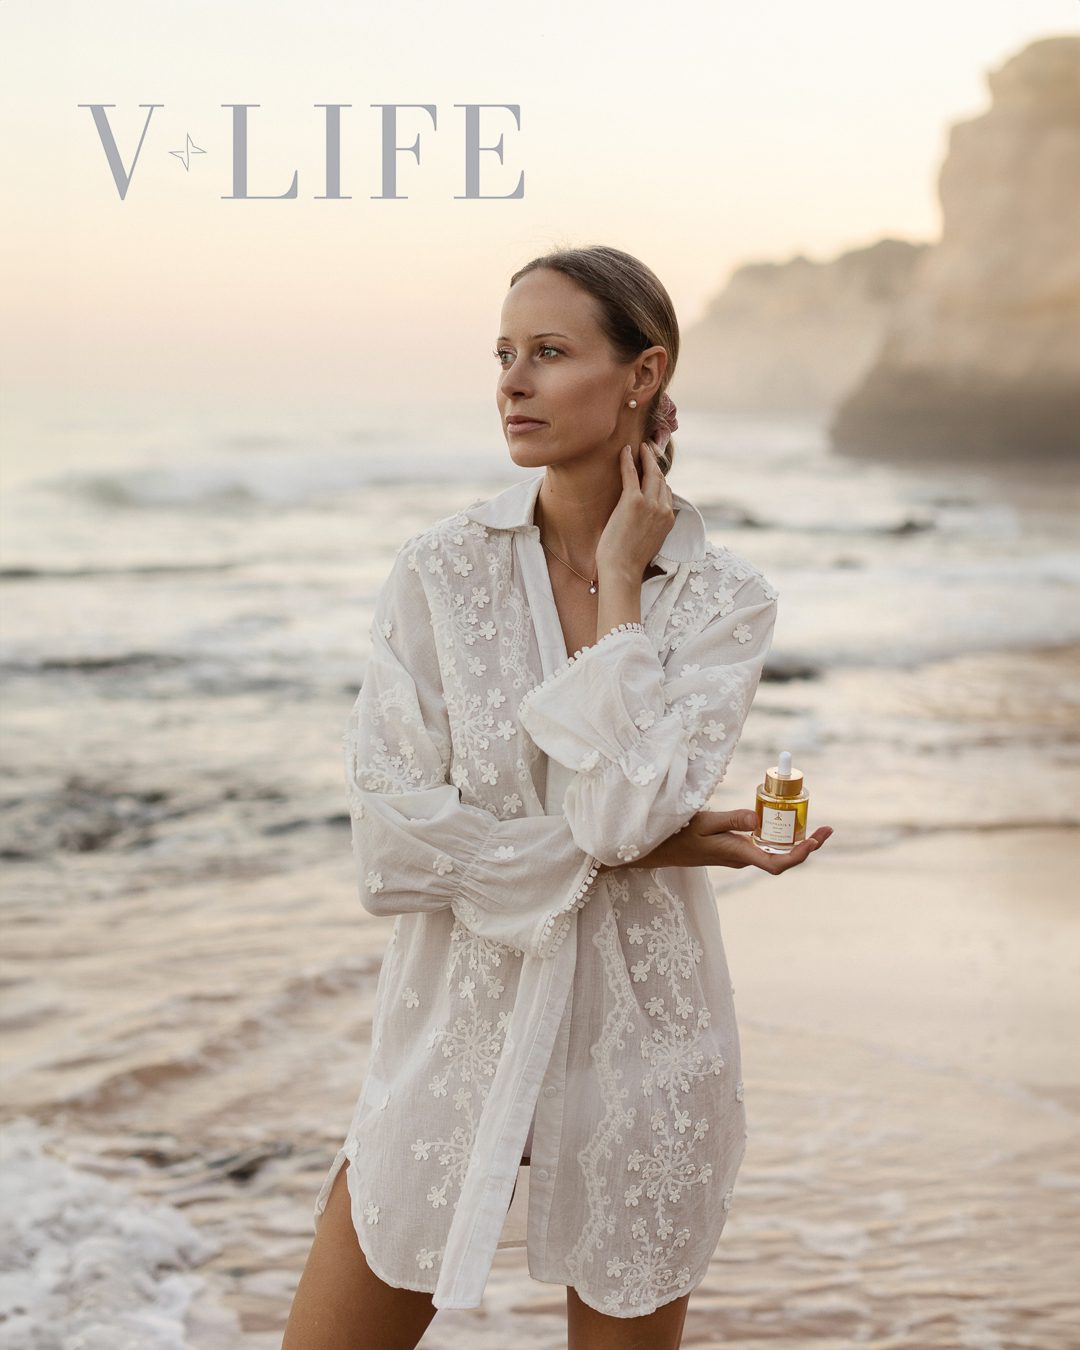 V Life Vila Vita magazine, magazine editorial, brand editorial, brand photographer Portugal, Algarve photographer,